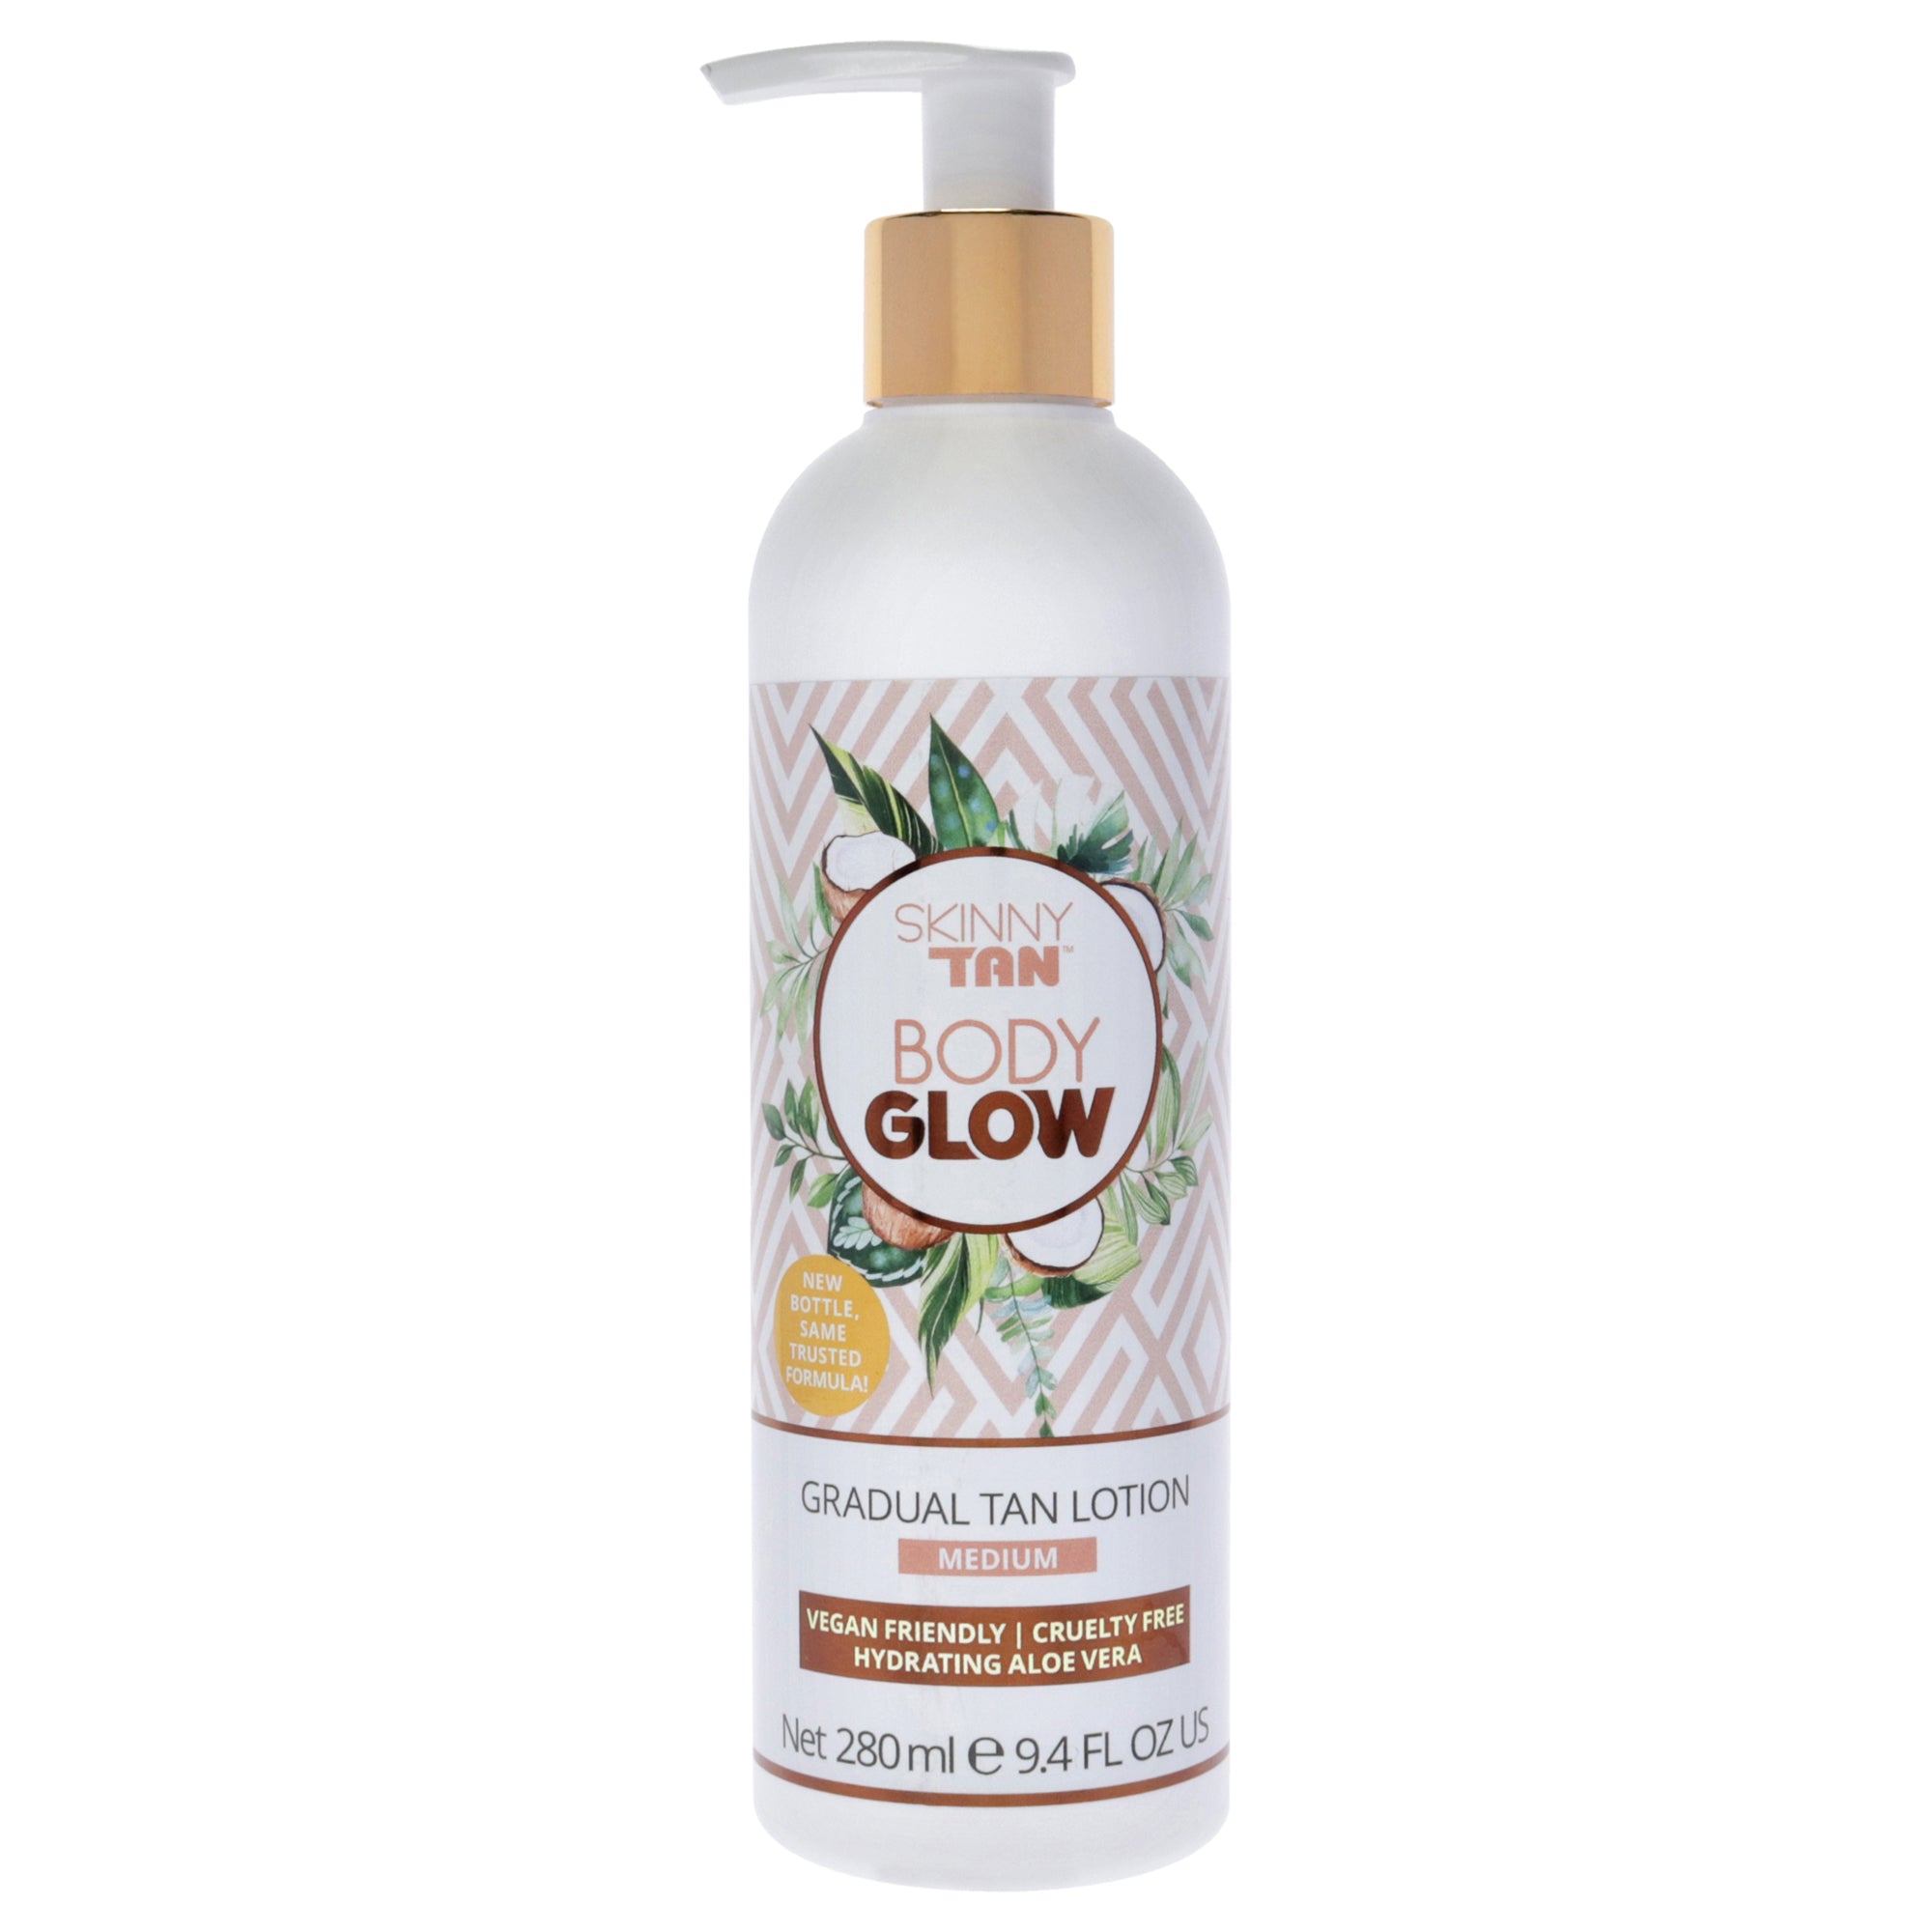 Body Glow Gradual Tan Lotion - Medium by Skinny Tan for Unisex - 9.4oz Lotion